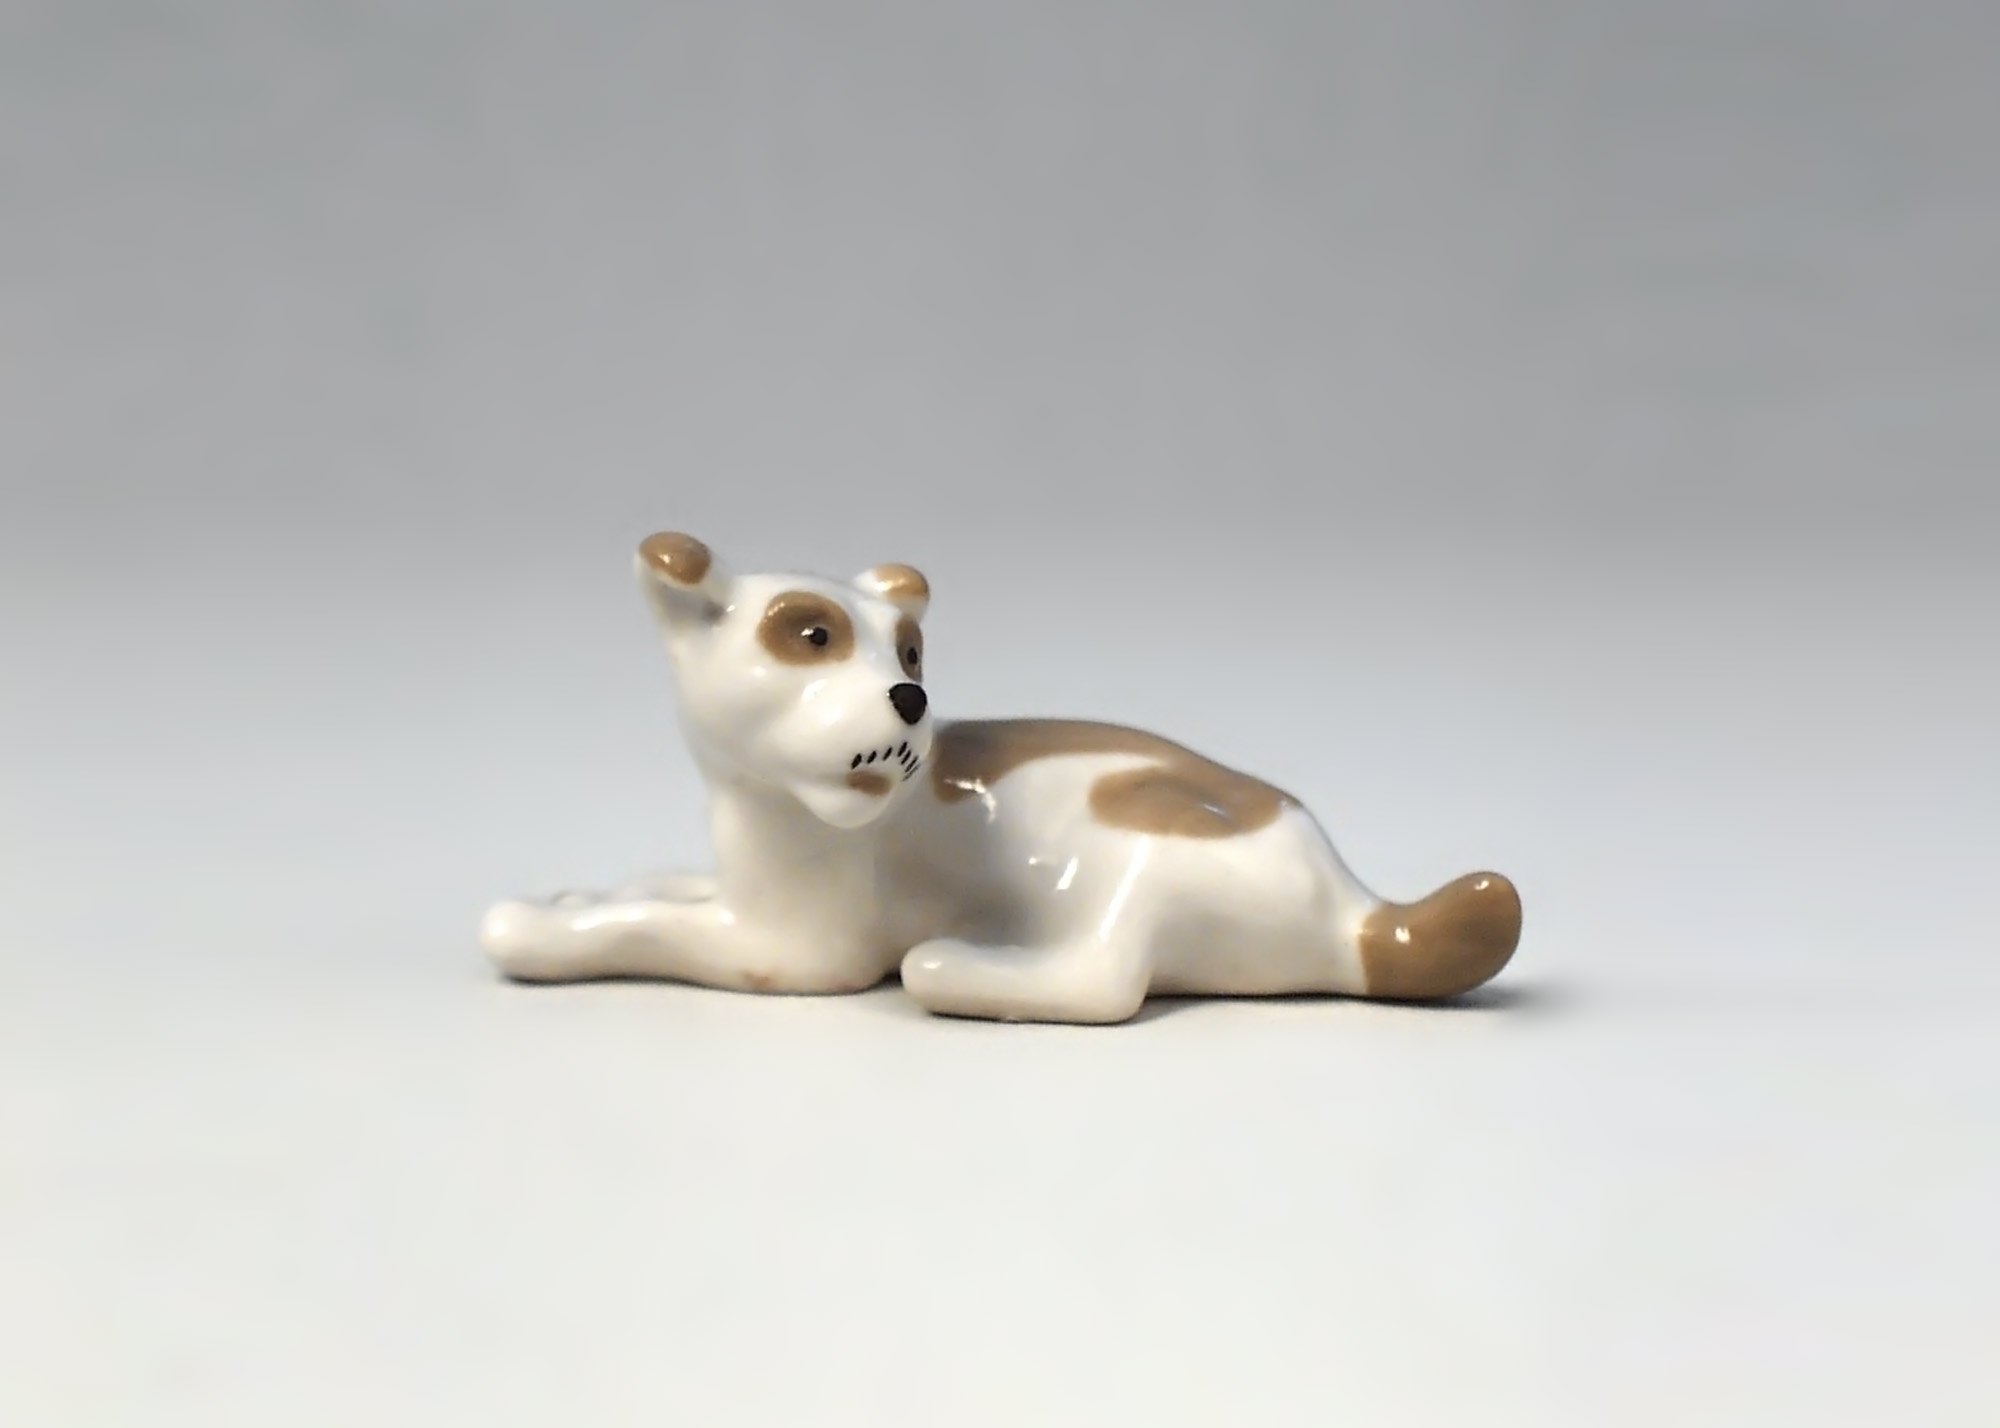 Buy Lovable Mutt Porcelain Figurine at GoldenCockerel.com